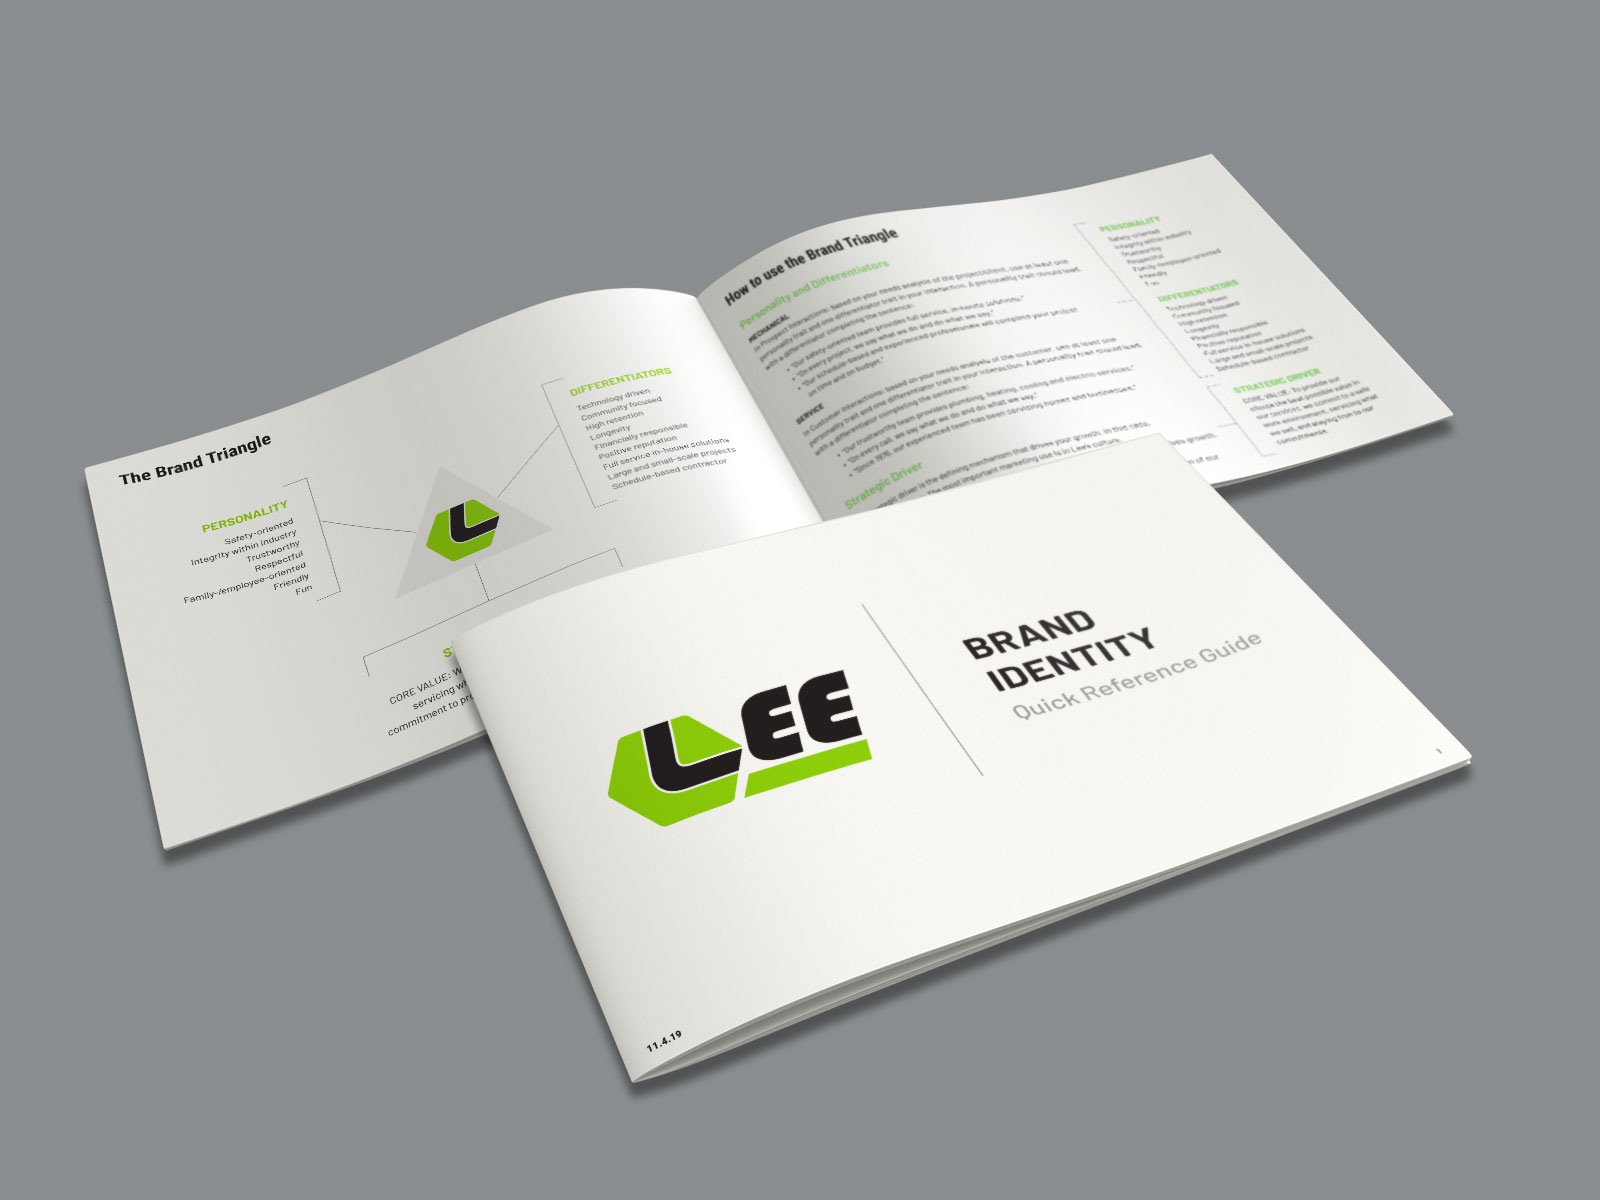 Lee Brand Guide Mockup 1600x1200